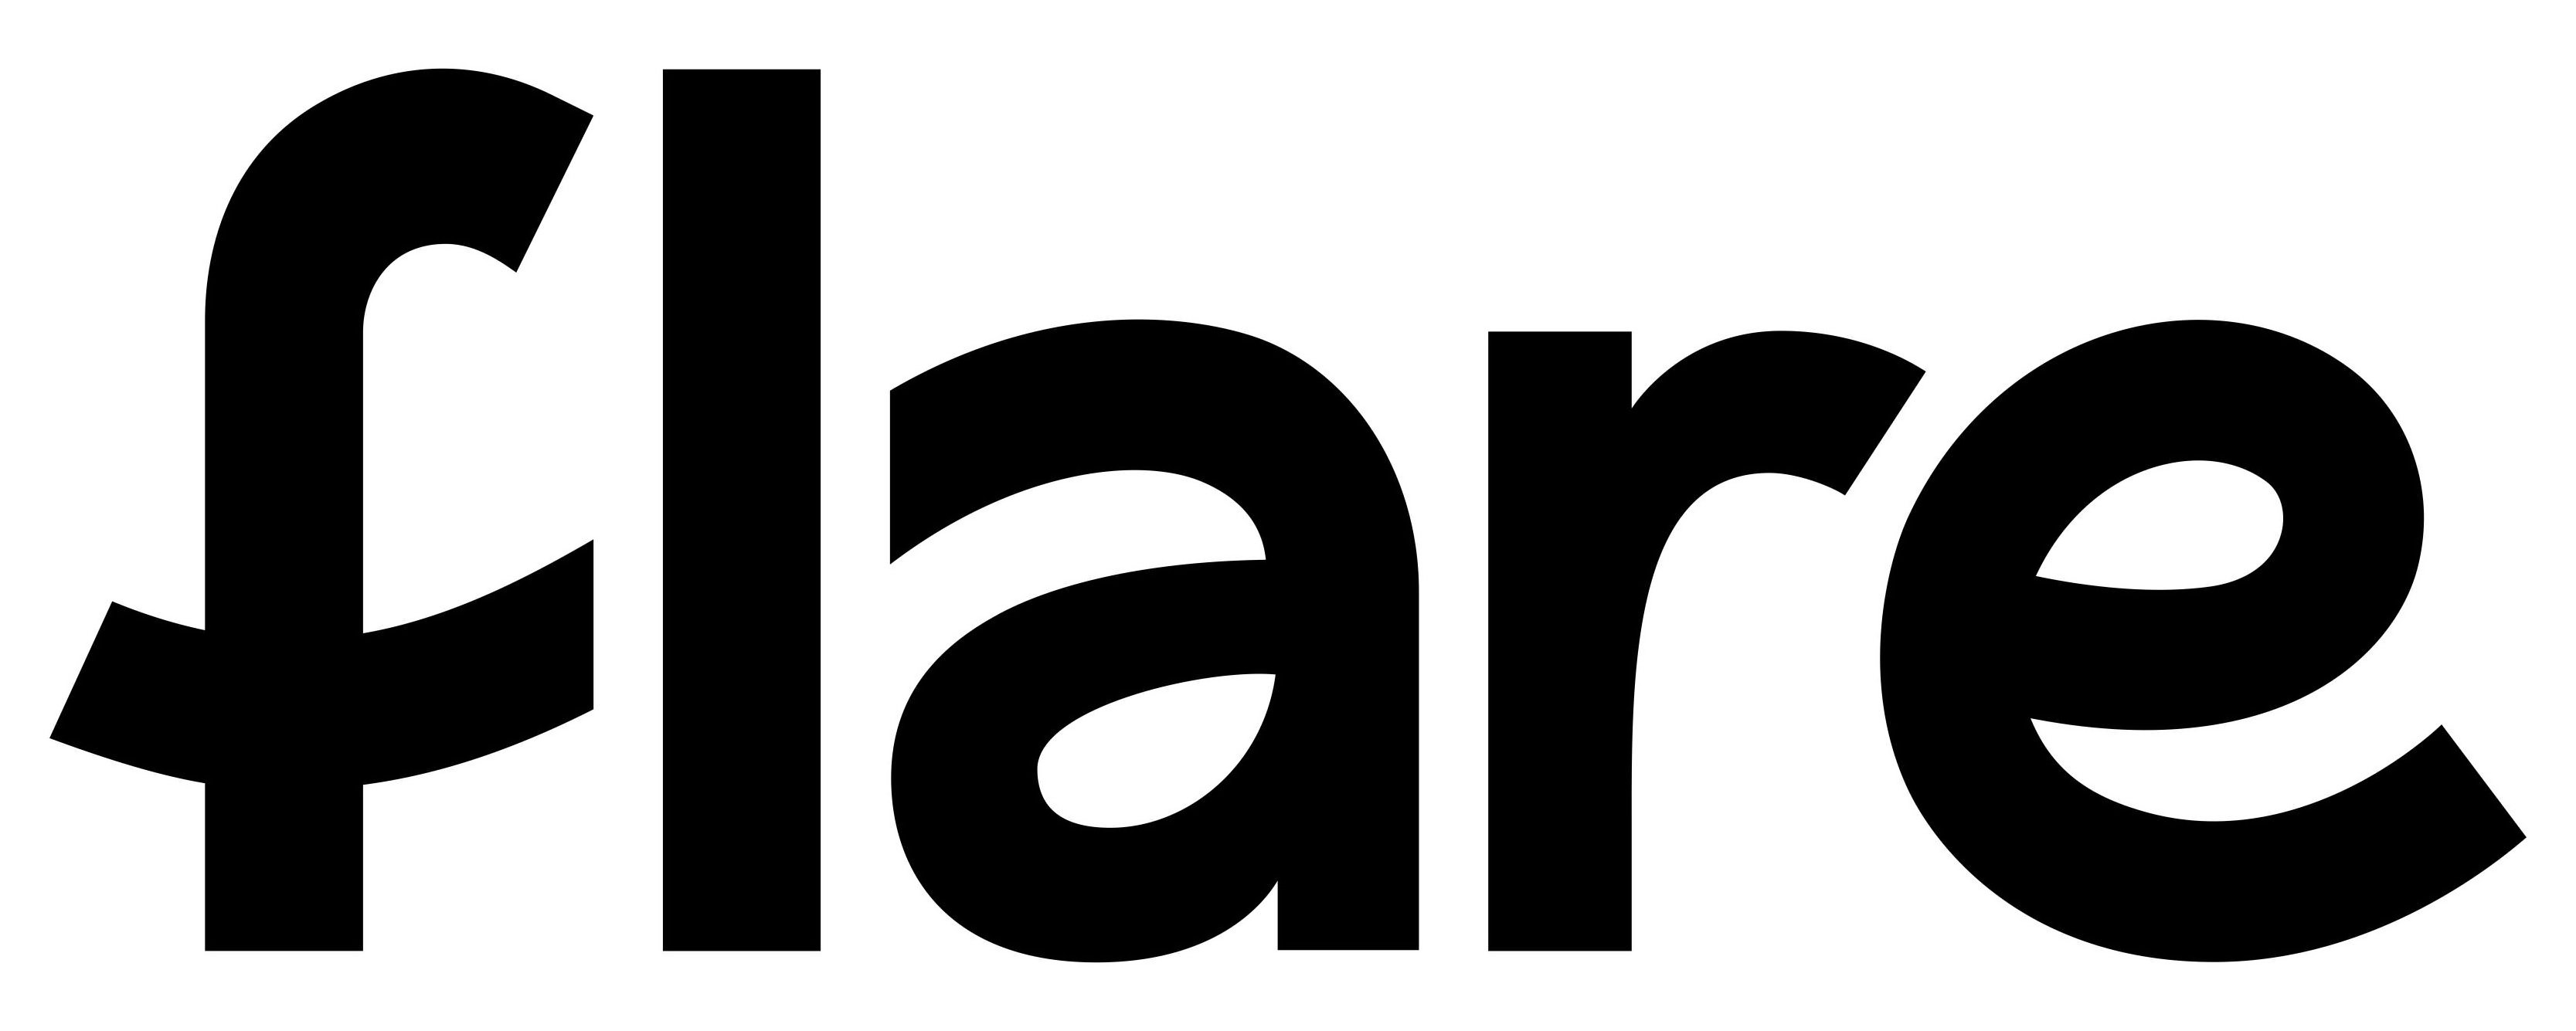 Trademark Logo FLARE